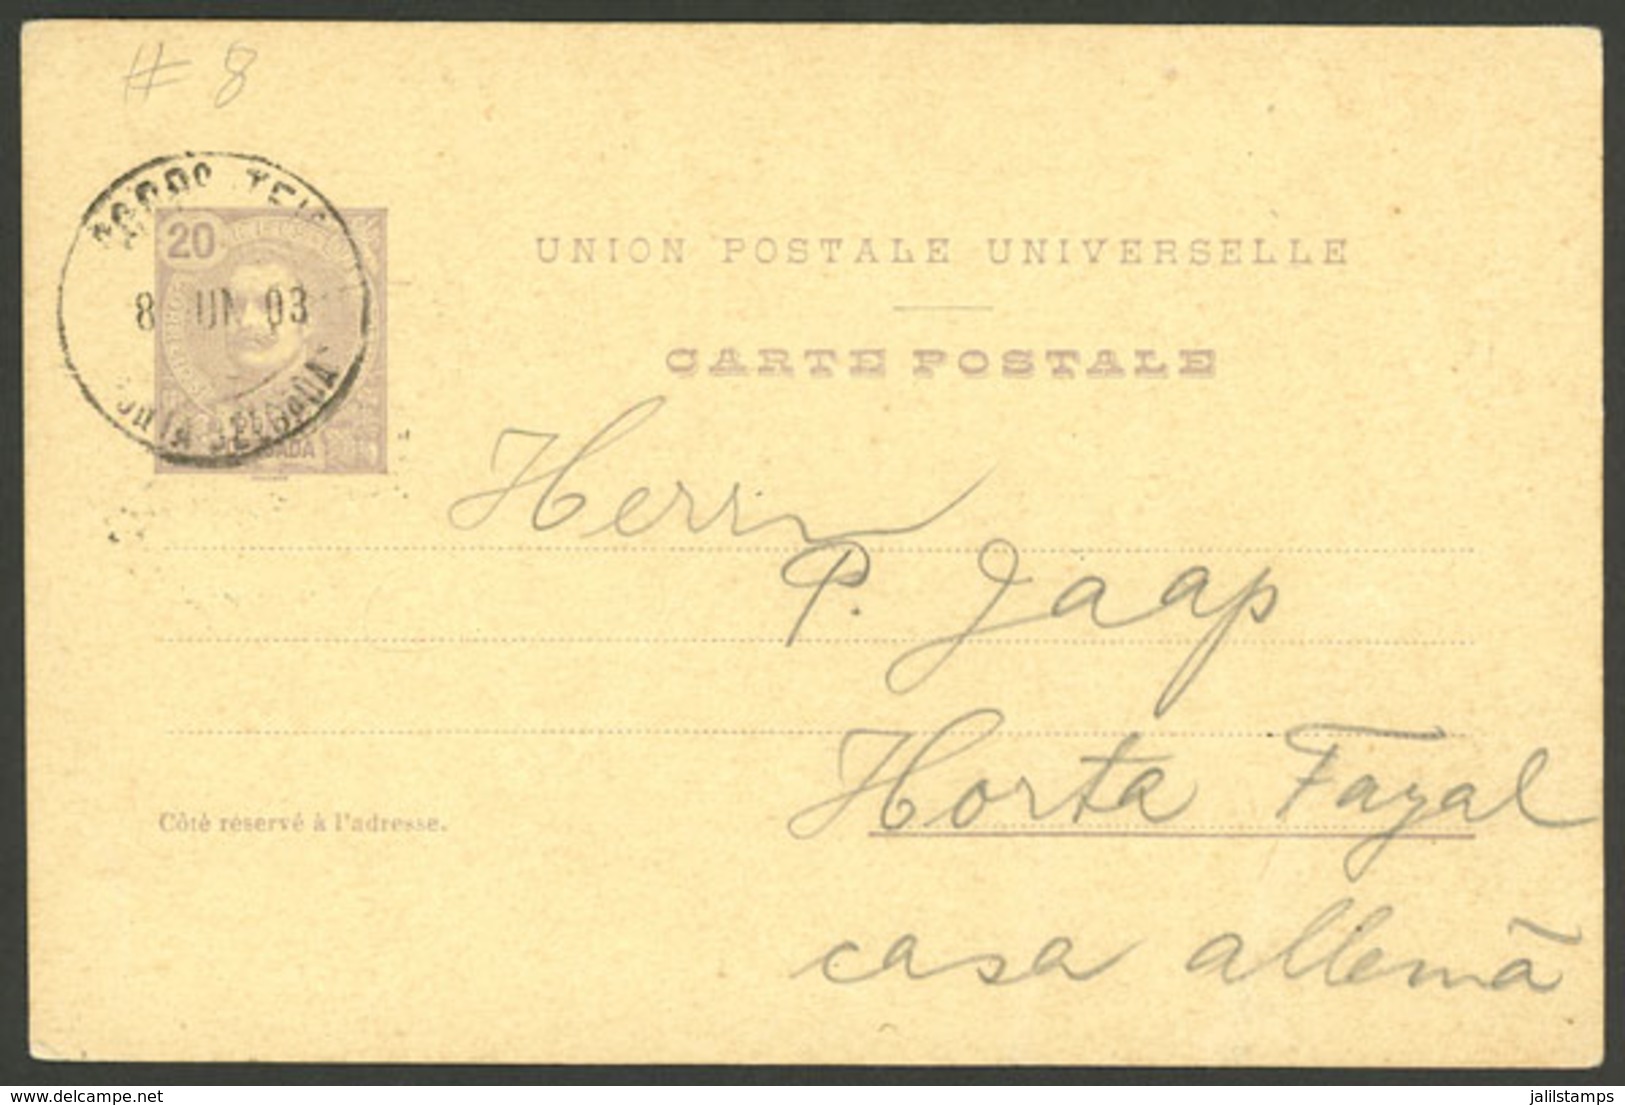 PORTUGAL - PONTA DELGADA: 20Rs. Postal Card Sent To Horta On 8/JUN/1903, With Arrival Backstamp Of 11/JUN, VF Quality! - Ponta Delgada